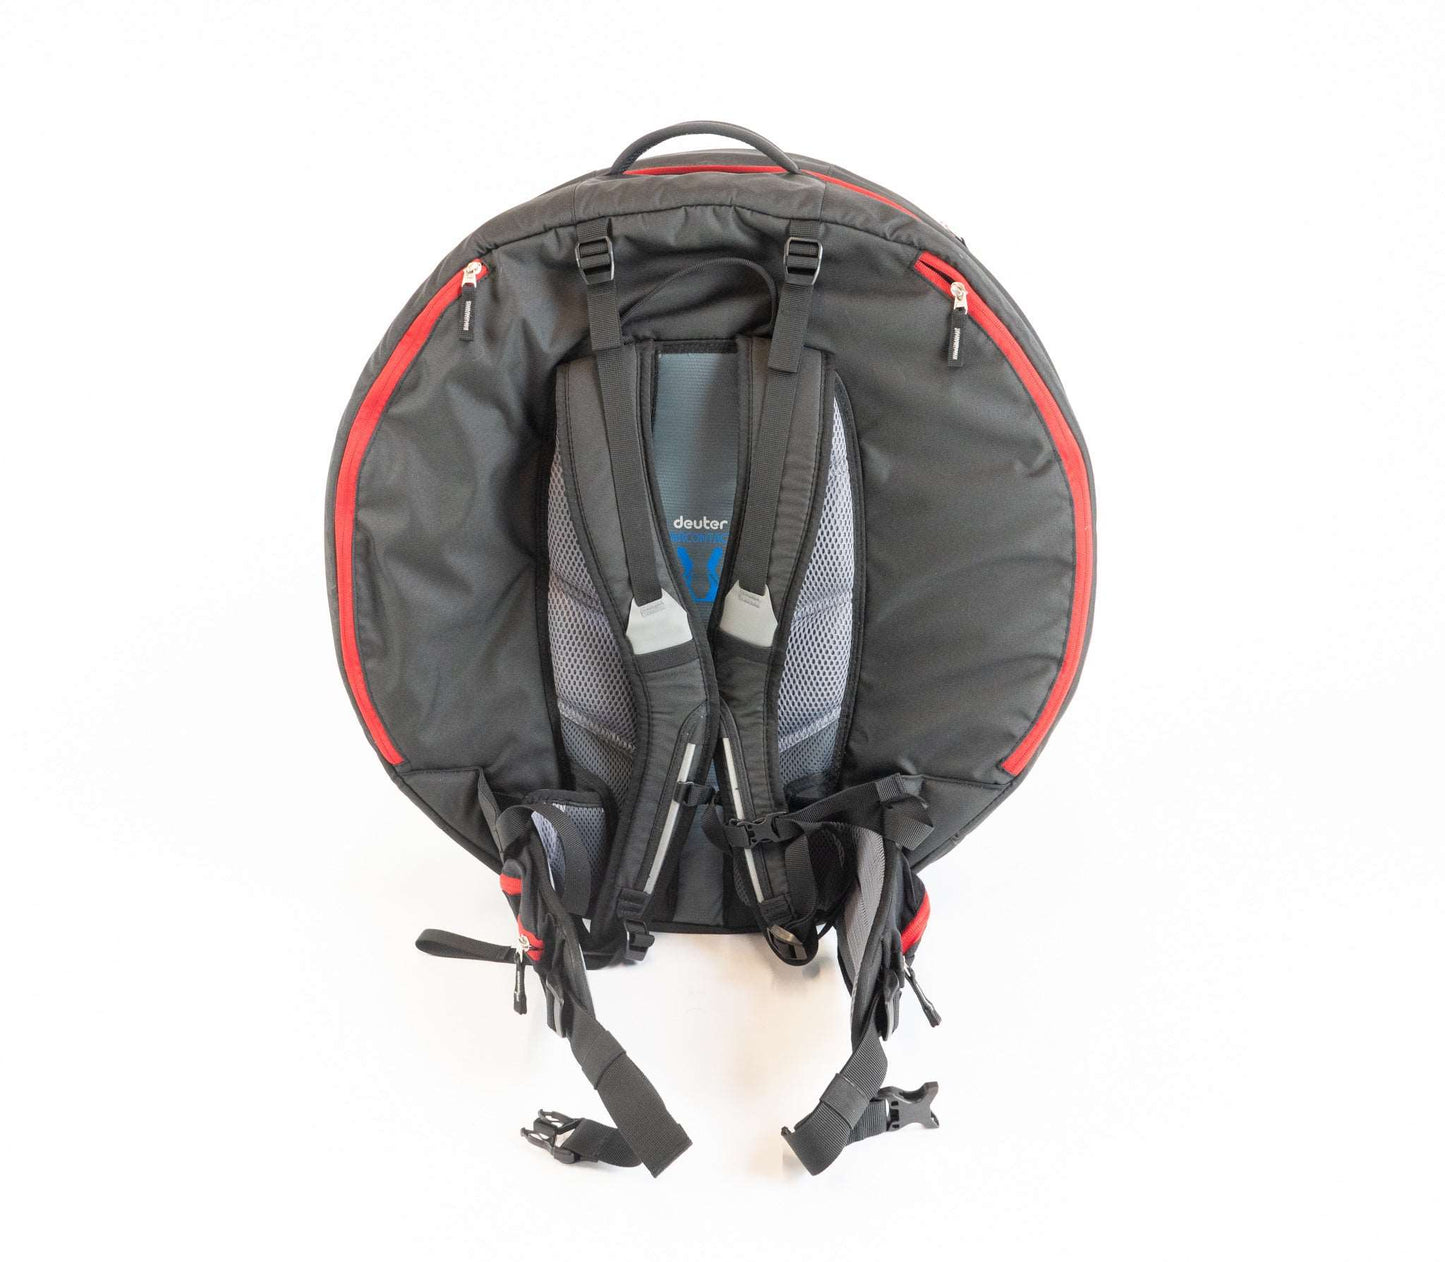 Handpan Softbag - Handpan Backpack (Softbag) - HandpanCare und DeuterHandpan Softbag - Handpan Backpack (Softbag) - HandpanCare und Deuter